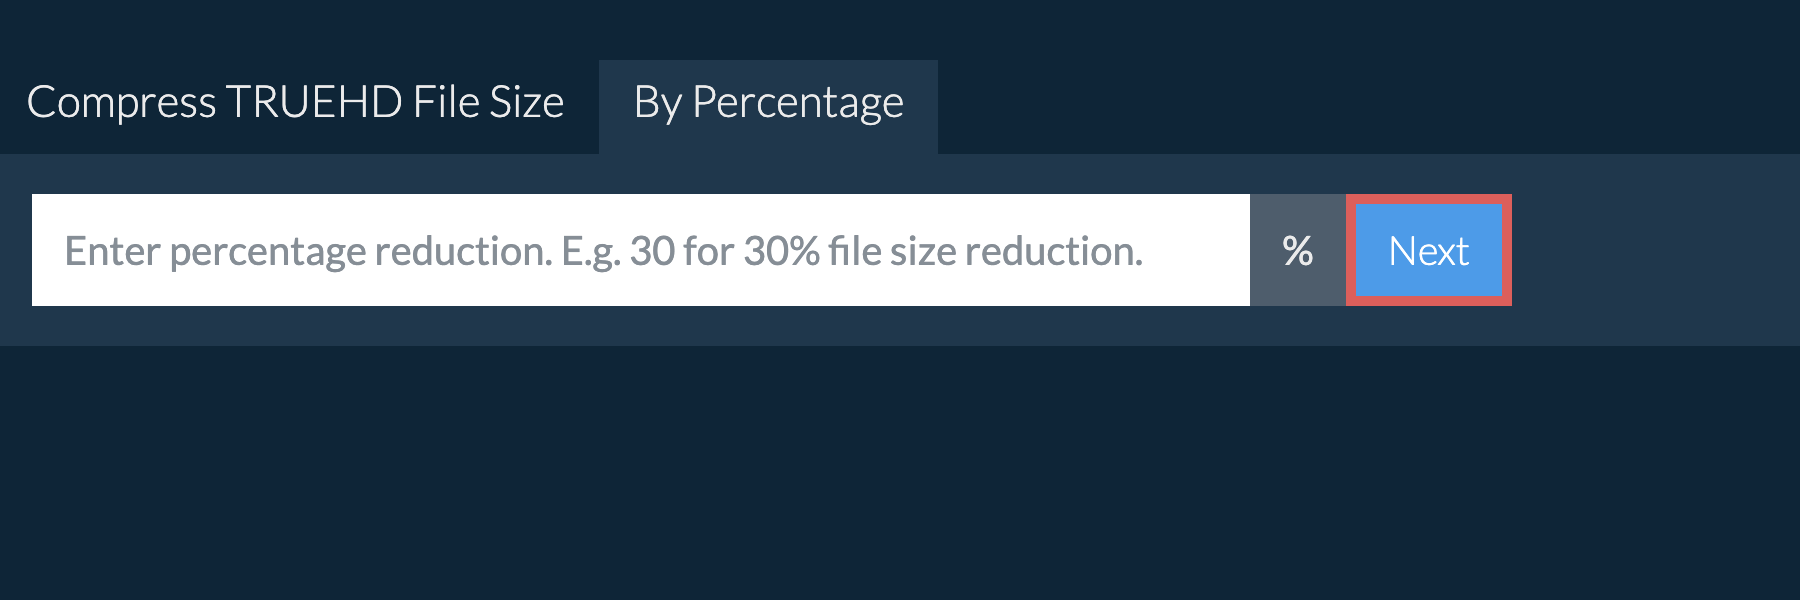 Reduce truehd By Percentage